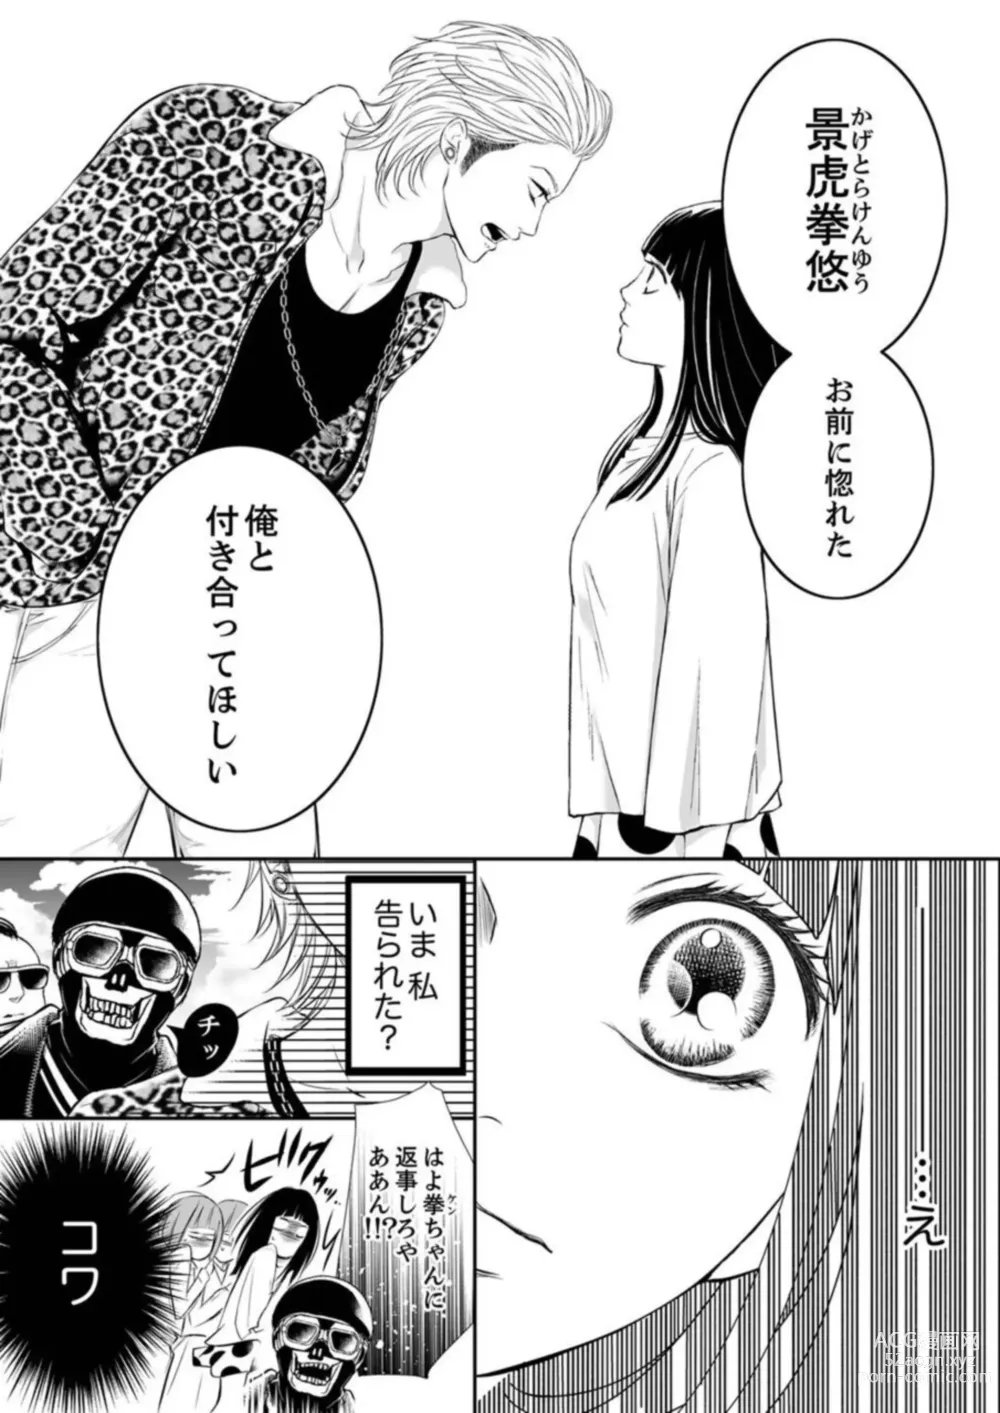 Page 5 of manga Juusei to Aegigoe ~ Uchinuku Tabi ni, Kikasero yo - Gun shot and Panting 1